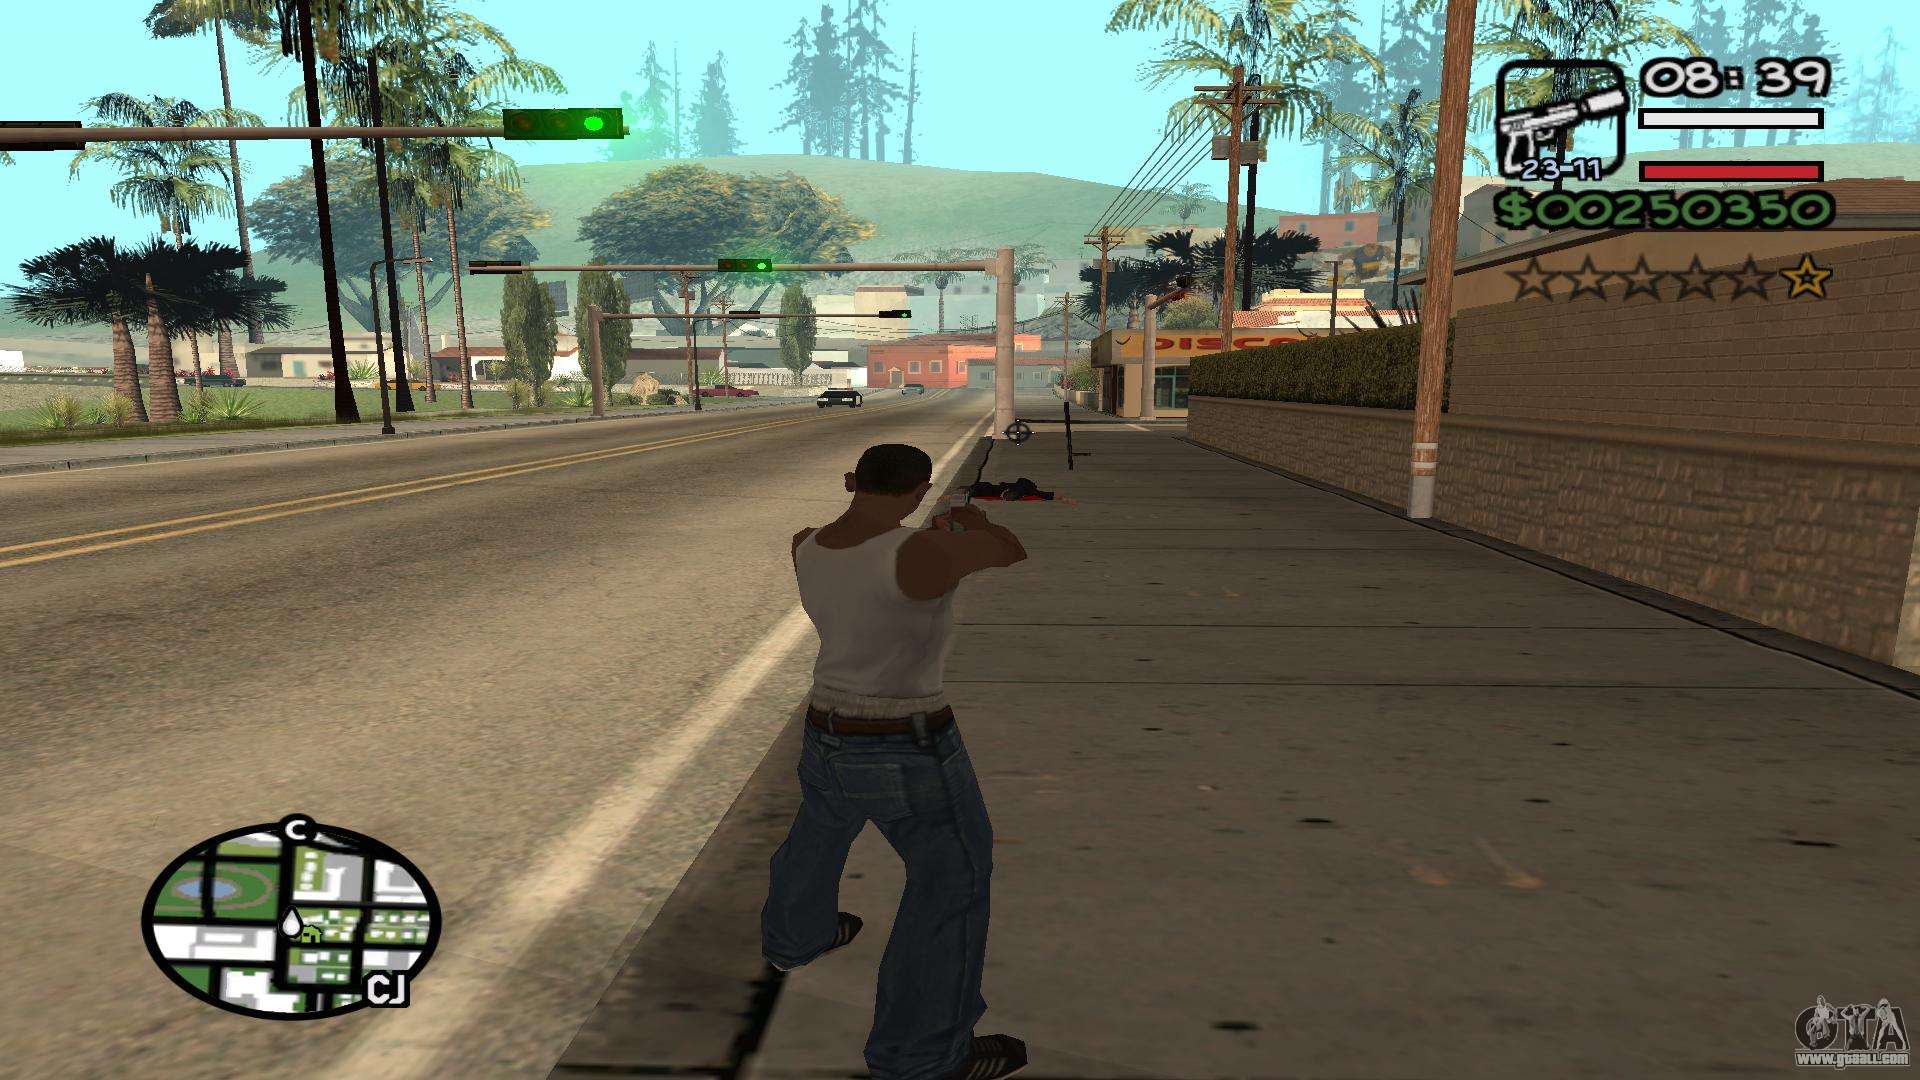 C HUD King Ghetto Life for GTA San Andreas